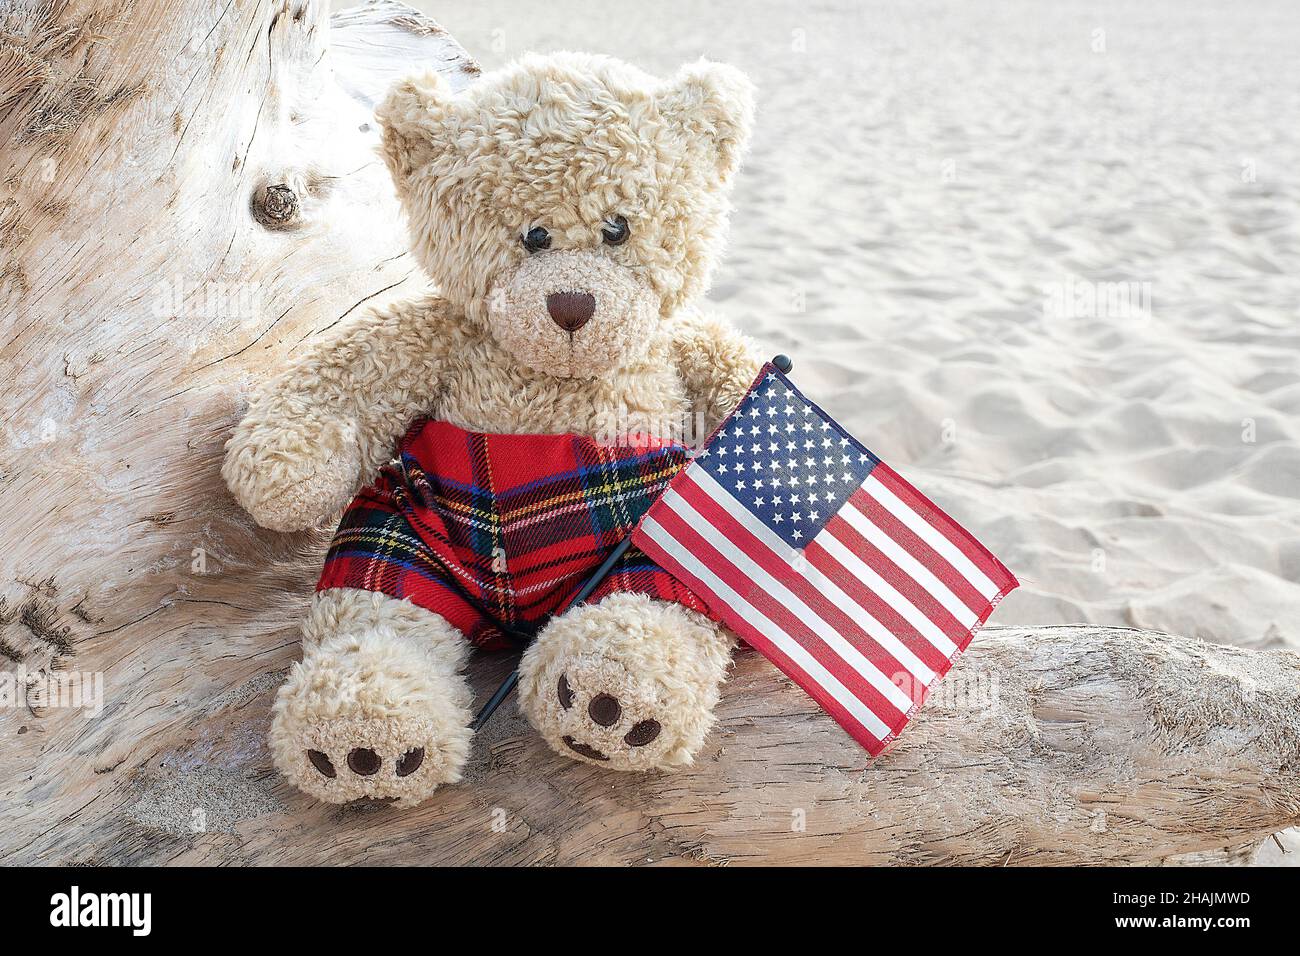 Fuzzy brown teddy bear with an American flag on beach driftwood Stock Photo